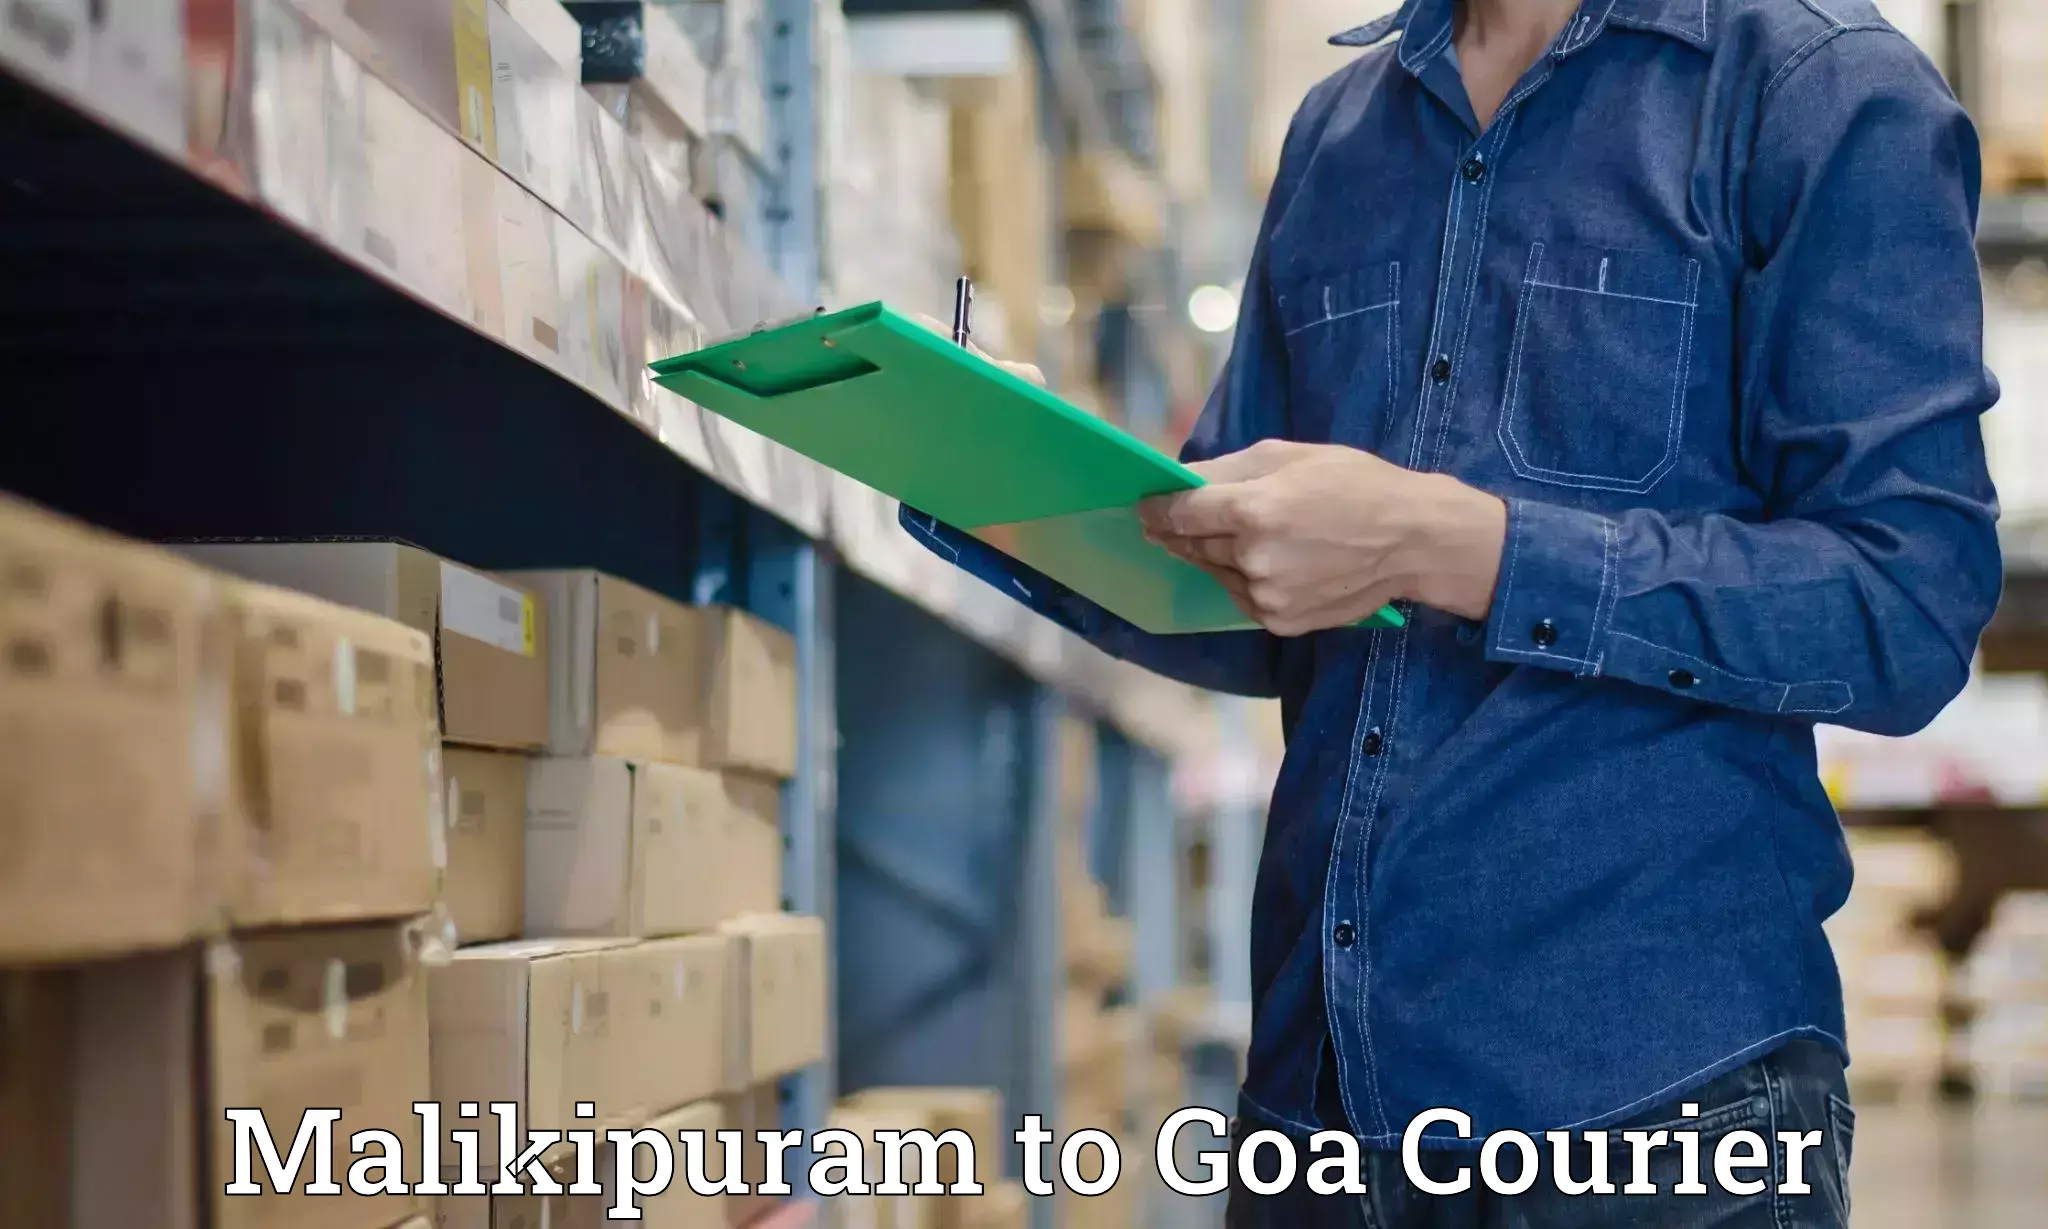 Large-scale shipping solutions Malikipuram to Mormugao Port